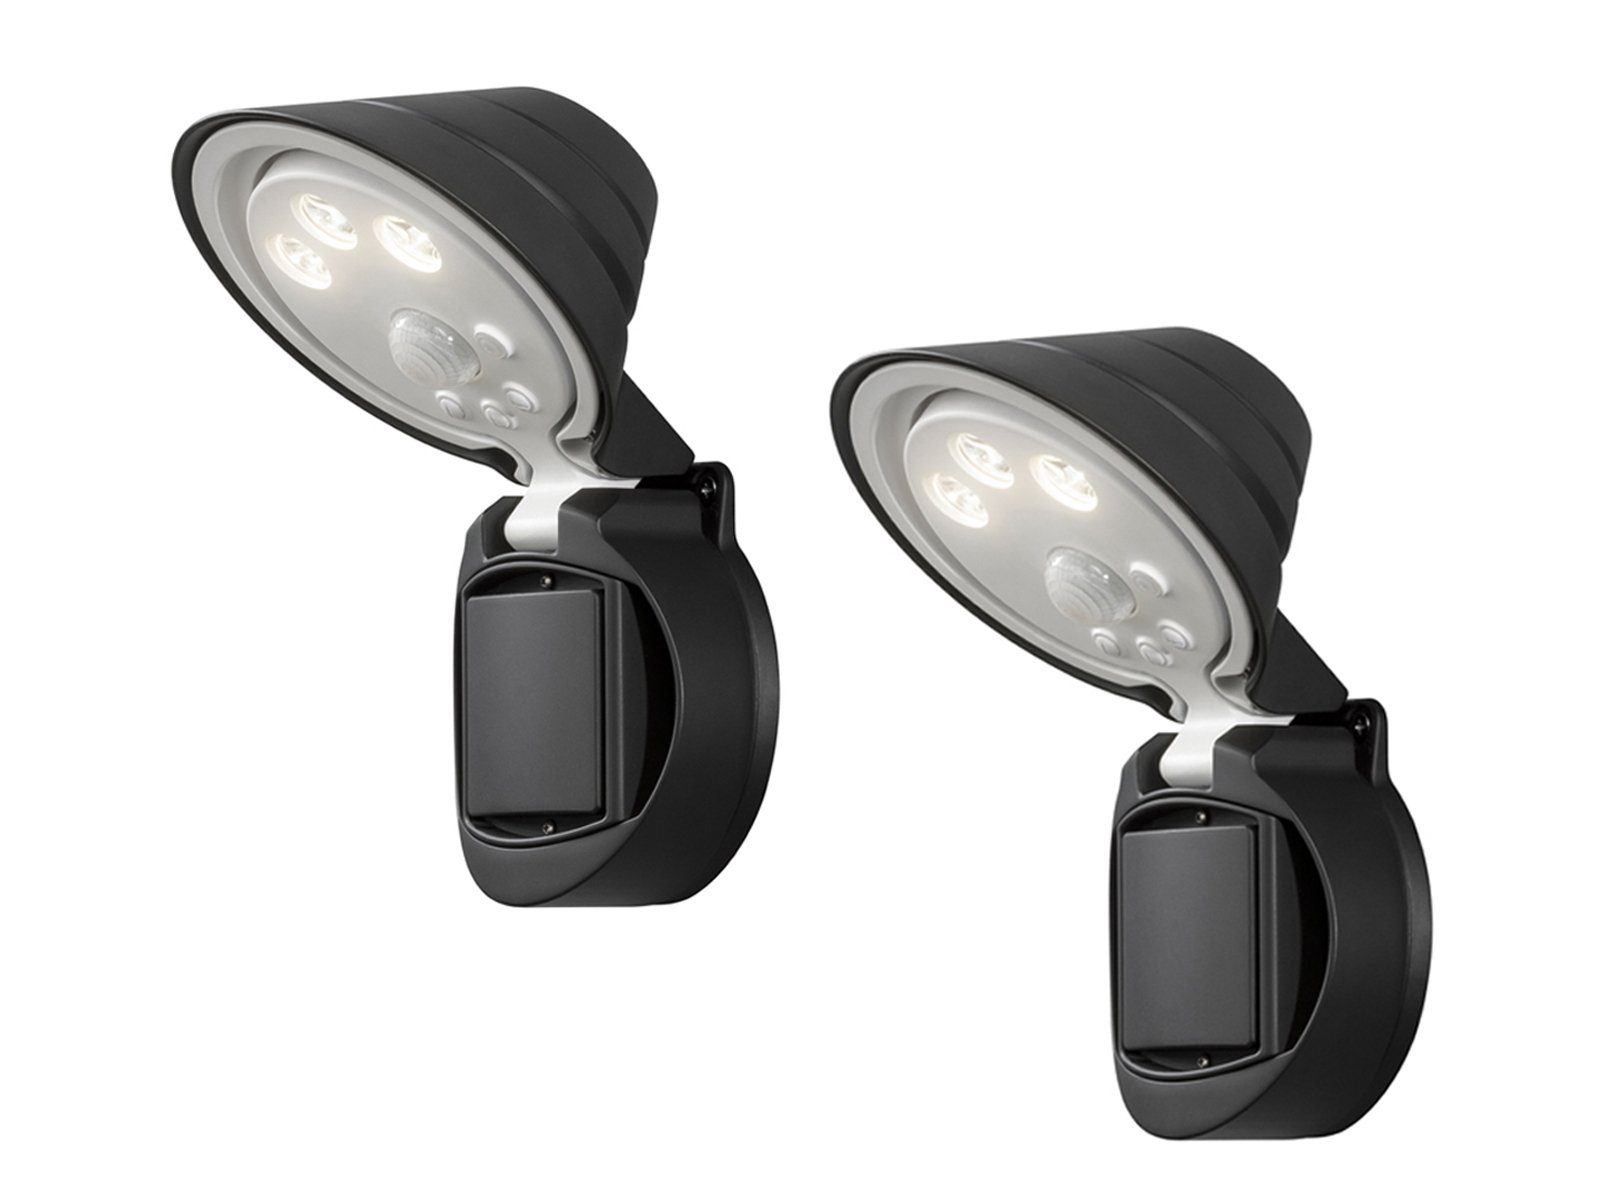 KONSTSMIDE LED Außen-Wandleuchte, LED fest integriert, Neutralweiß, 2er  Set, Außen-Licht mit Bewegungsmelder, Fassadenbeleuchtung Hauswand, NICHT  enthalten: 2 LR20/D (1,5 Volt) Batterien je Leuchte